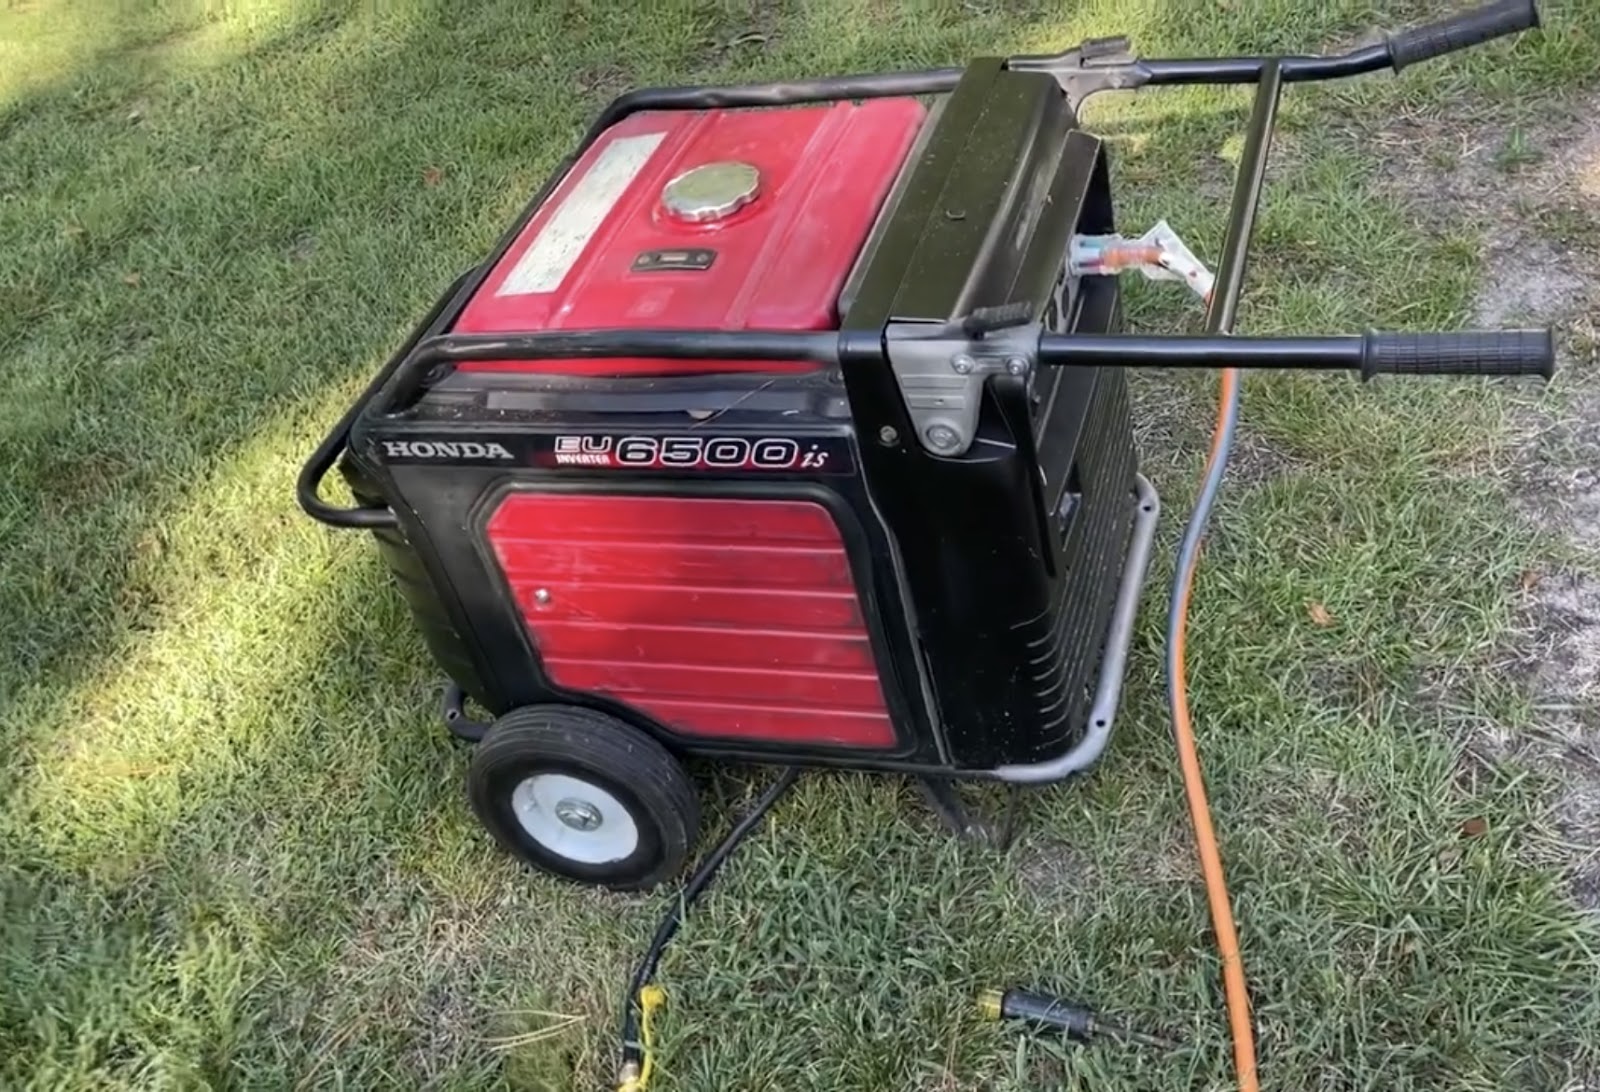 Generator on the grass